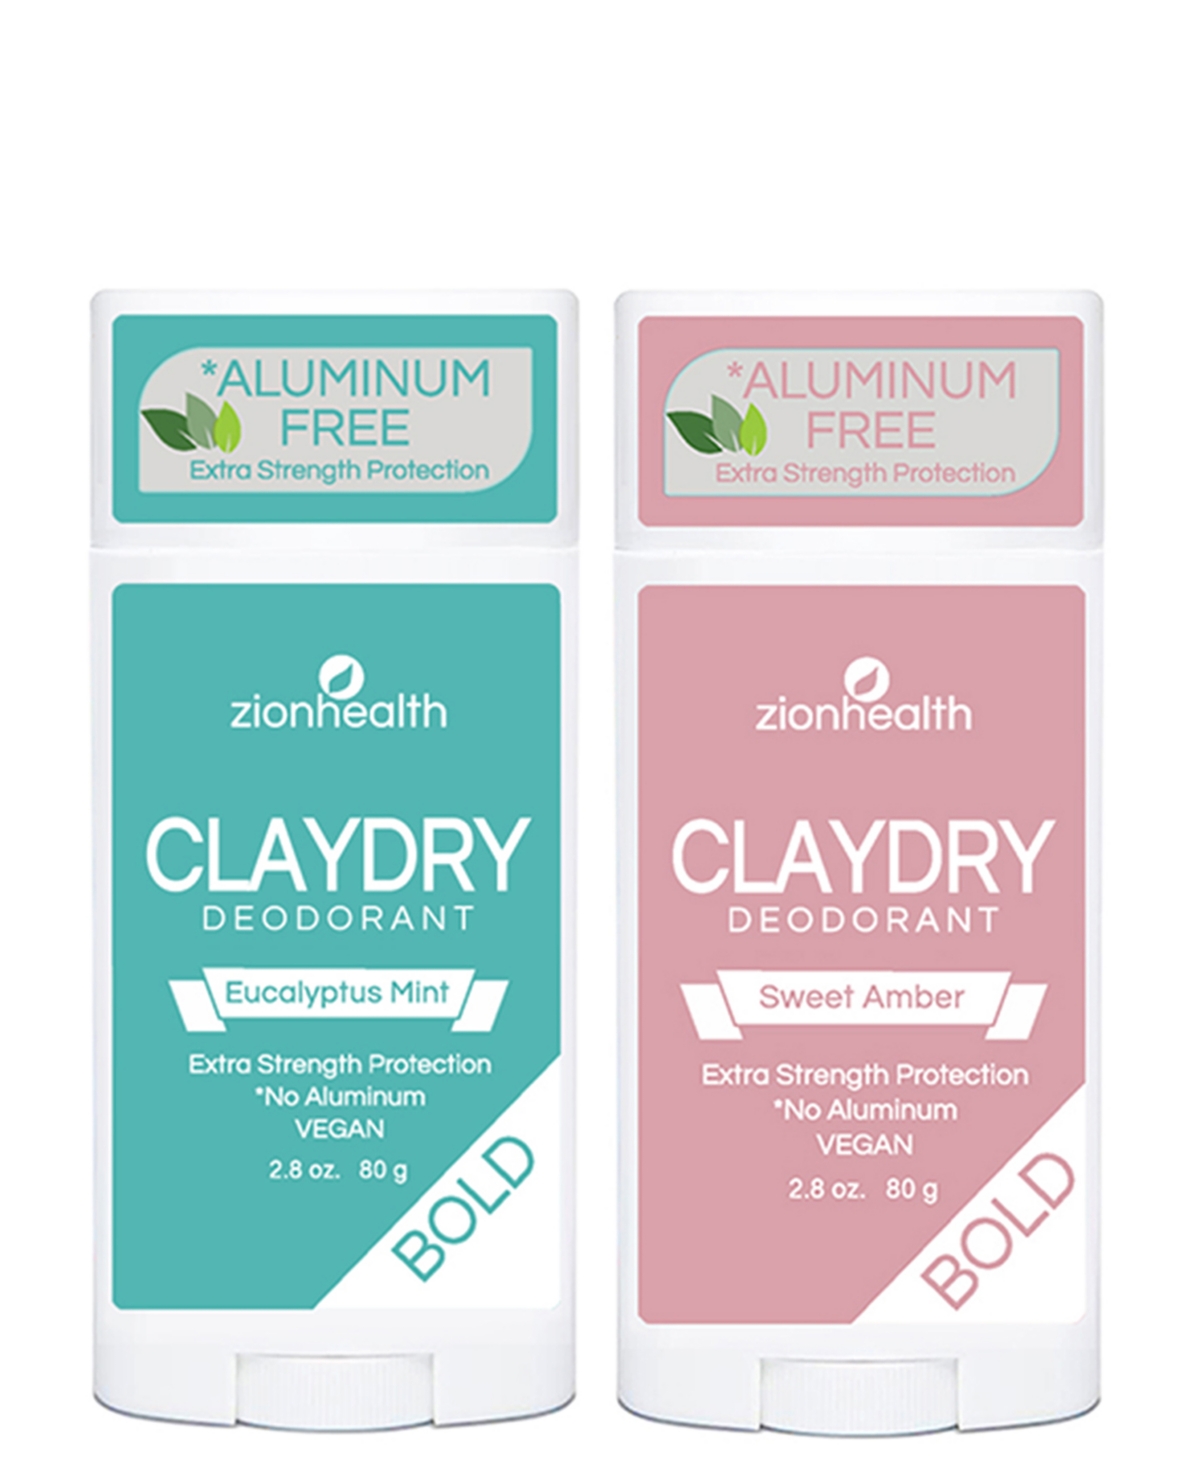 Eucalyptus Mint Plus Sweet Amber Deodorant Duo, 5.6oz